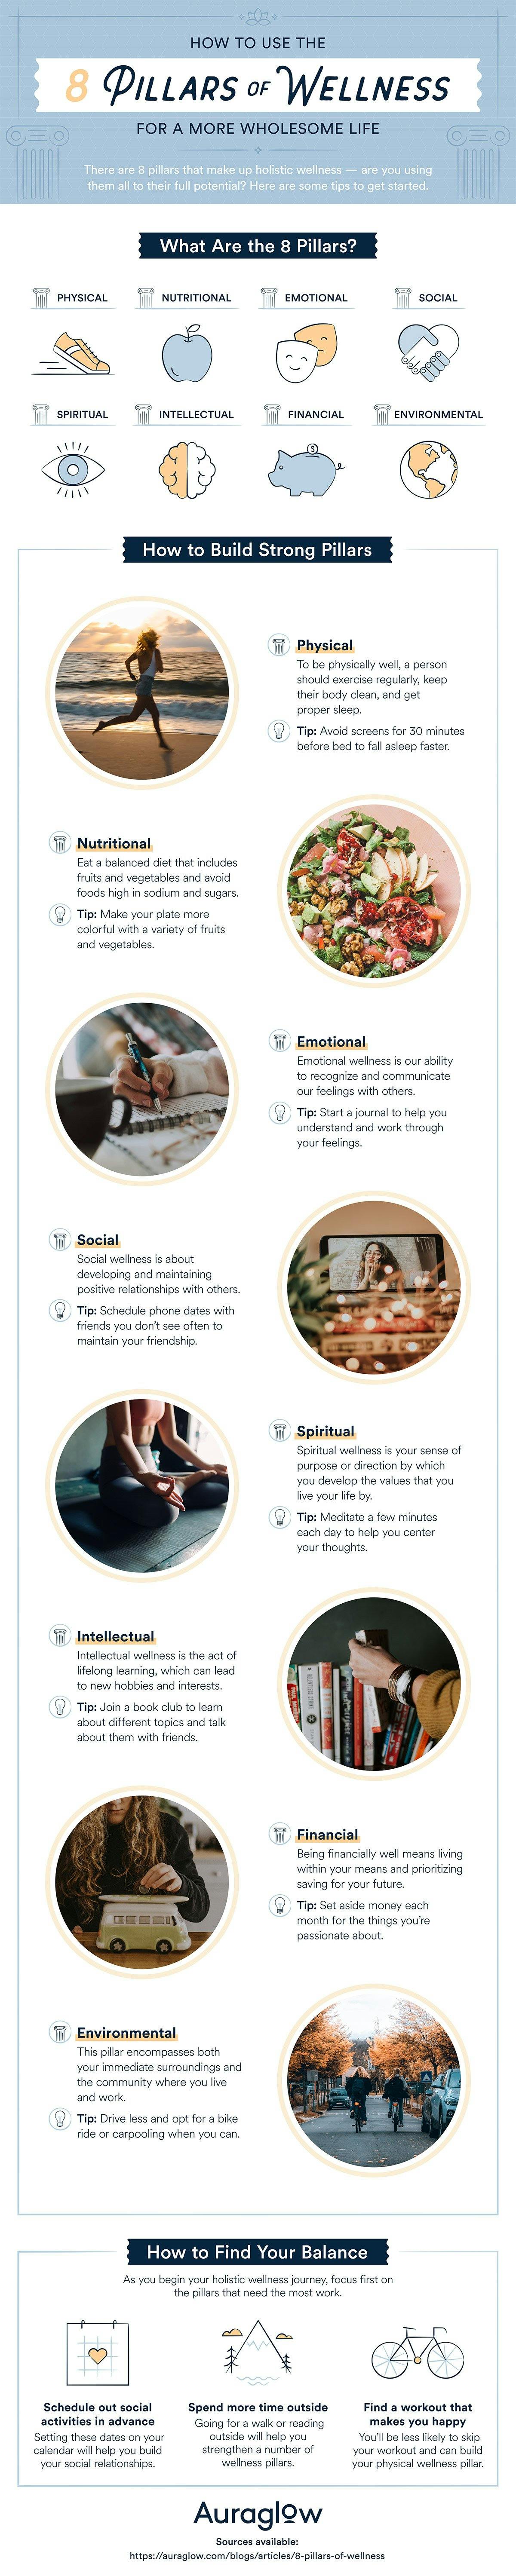 8 pillars of wellness infographic